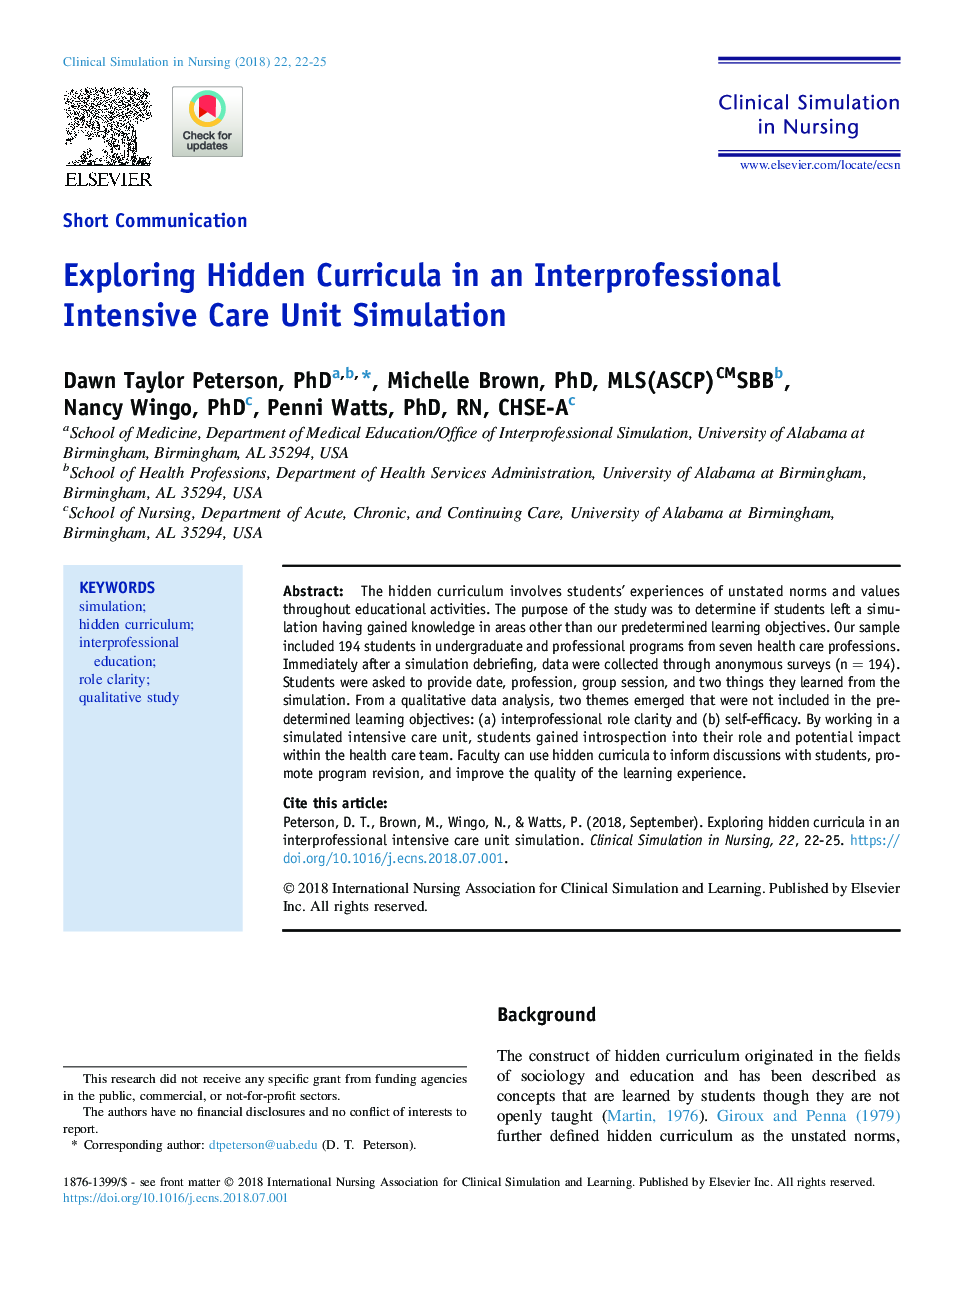 Exploring Hidden Curricula in an Interprofessional Intensive Care Unit Simulation